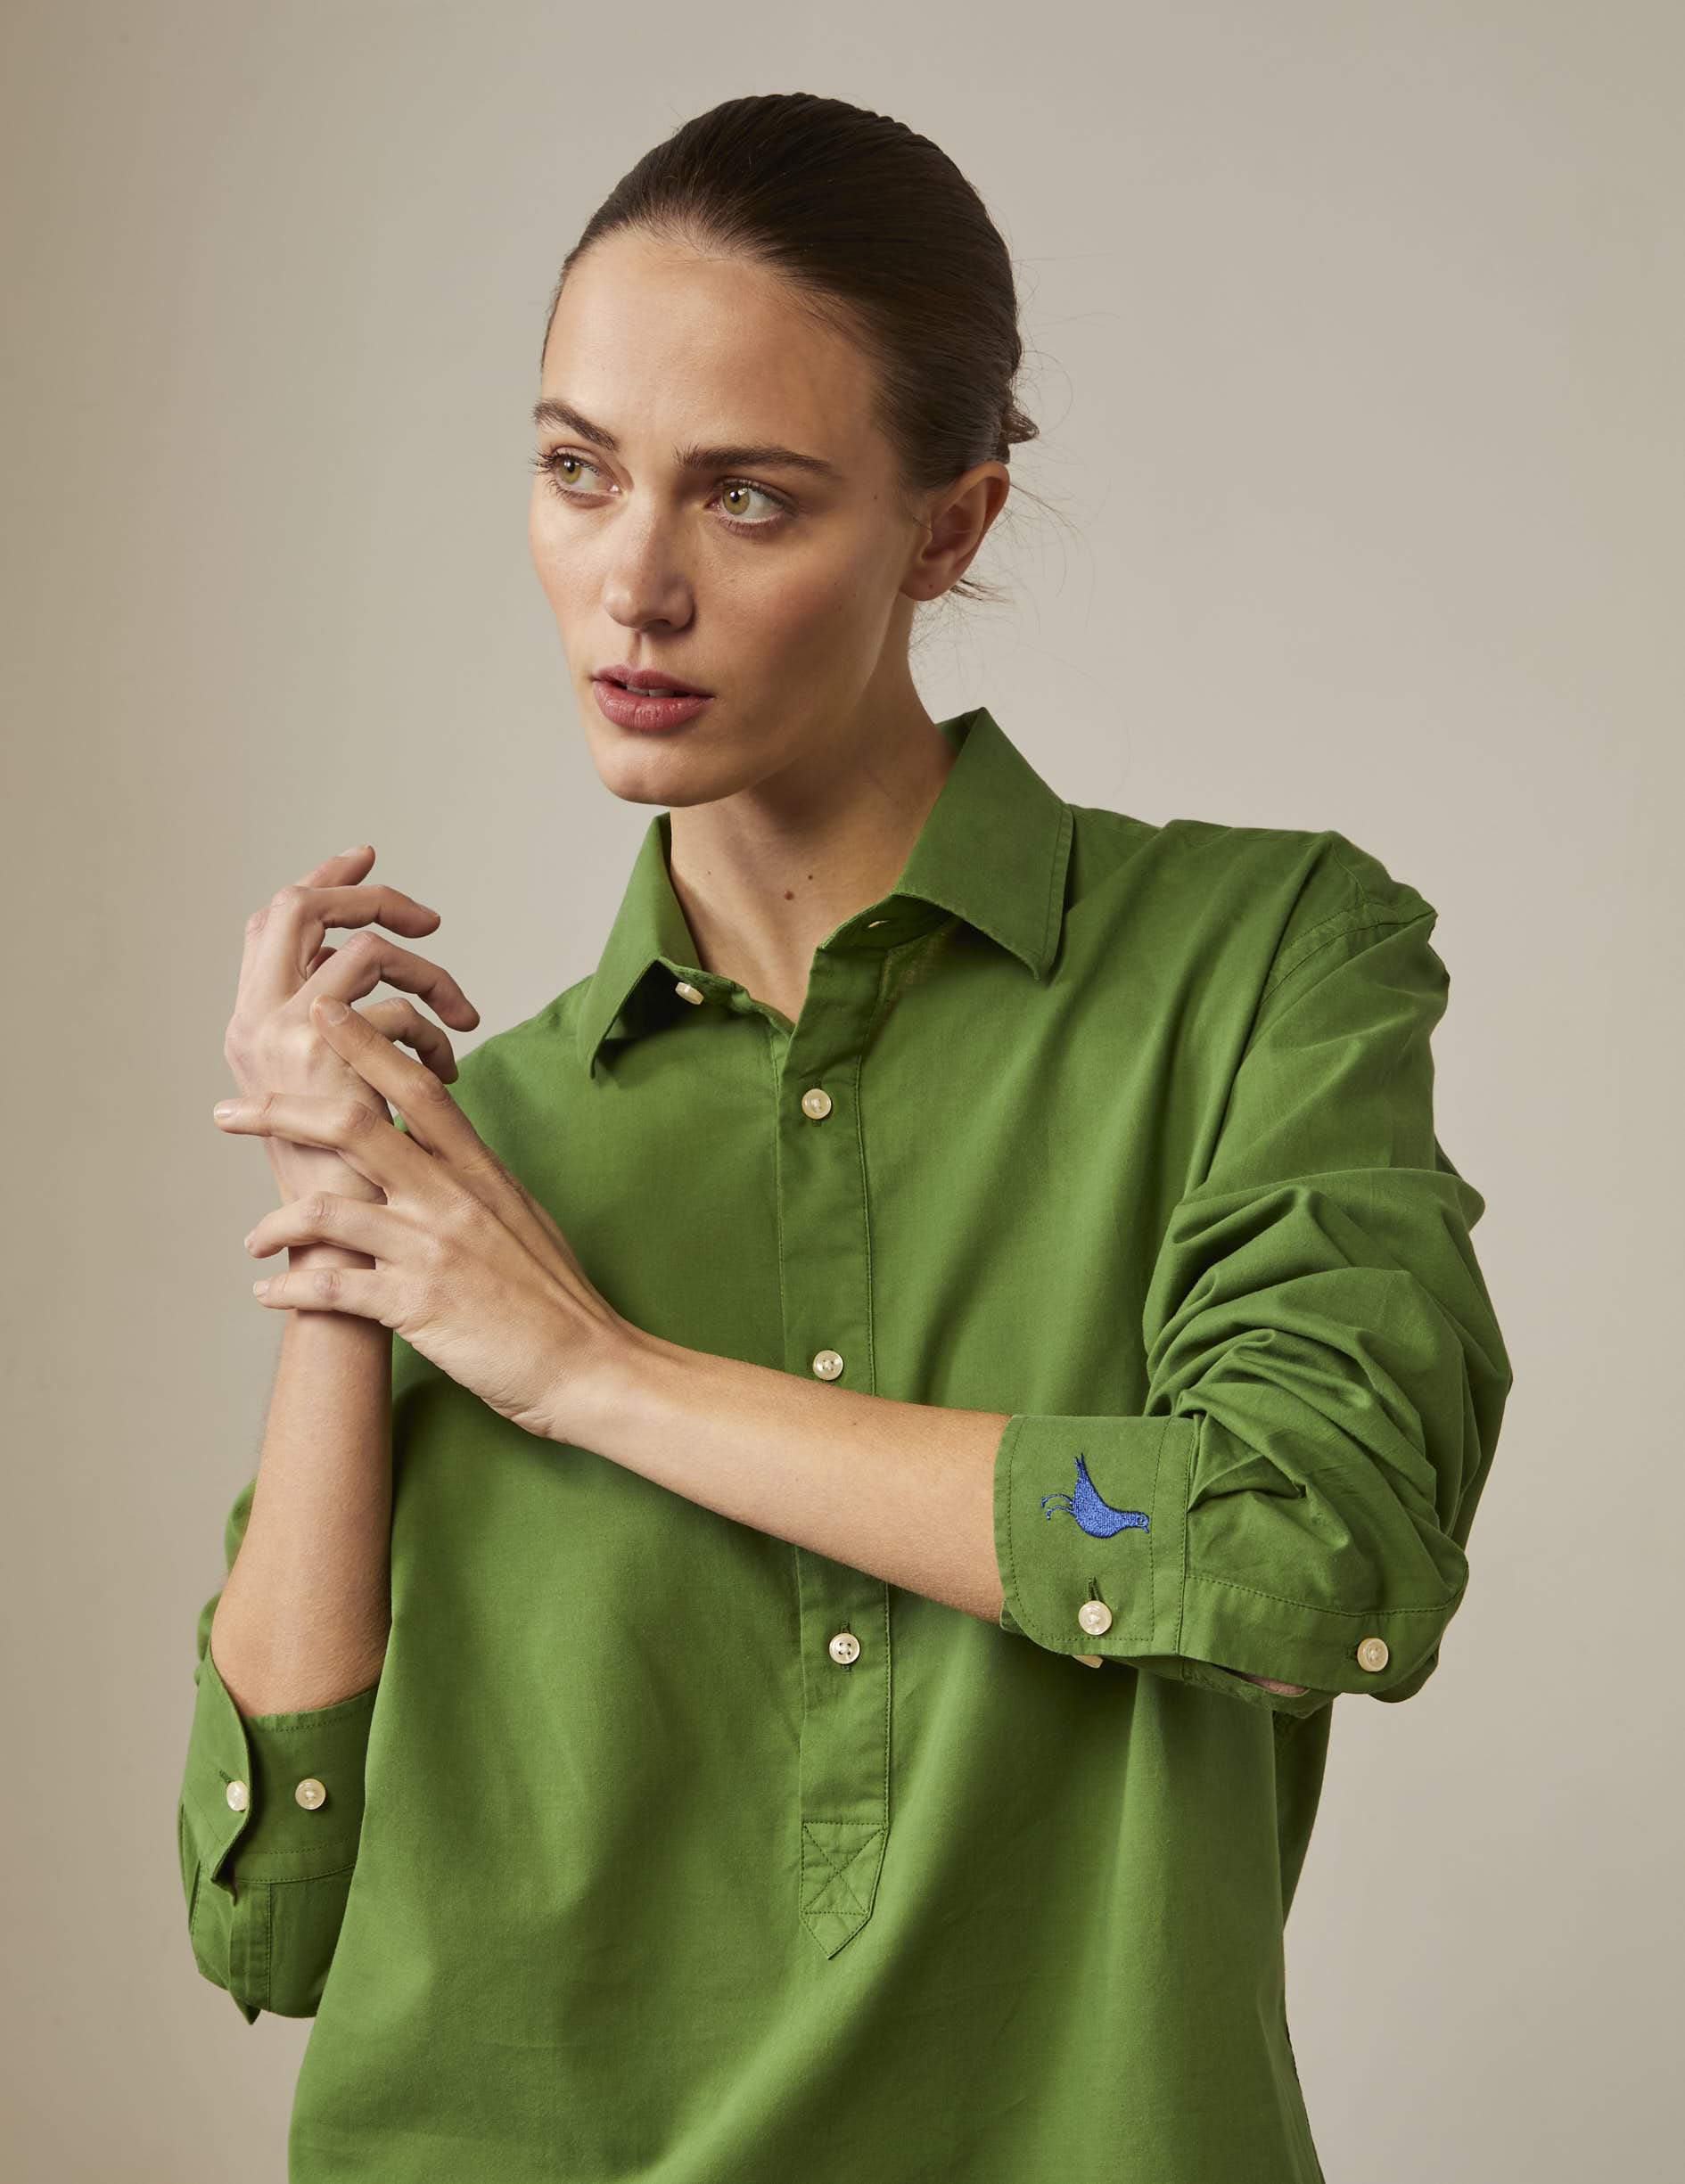 Green Cadaques shirt - Cotton voile - Shirt  Collar